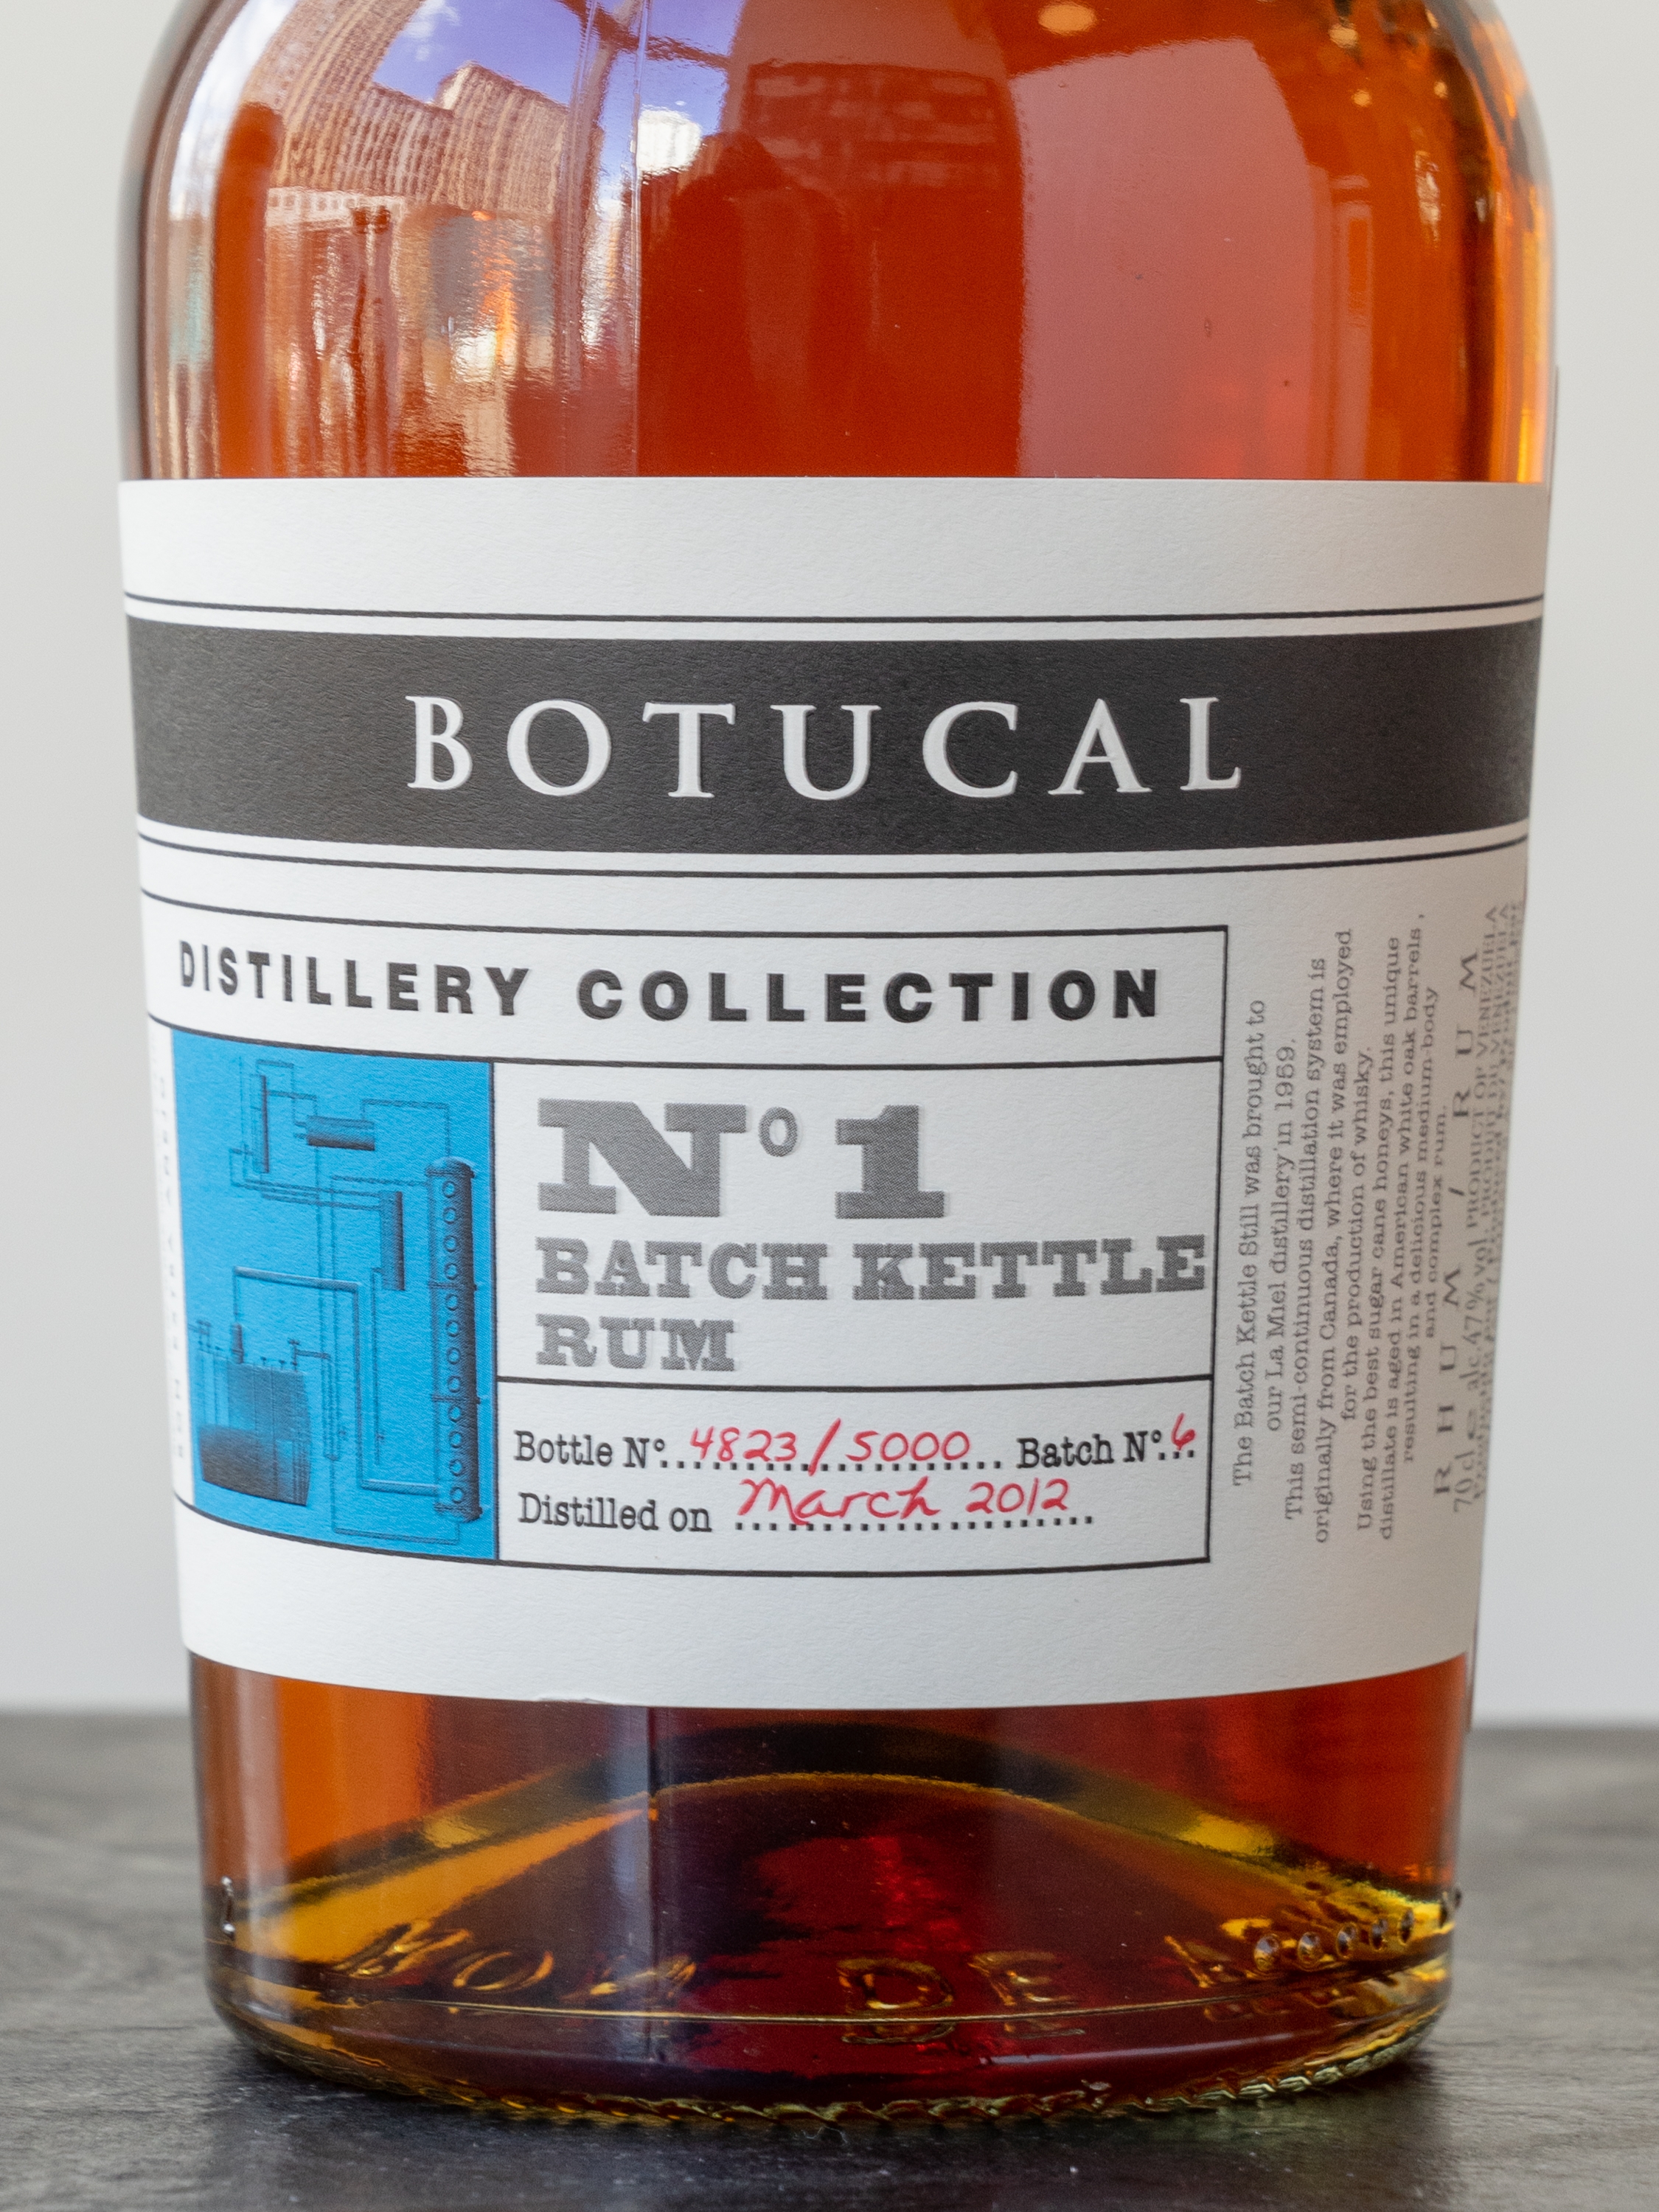 Ром Botucal Diplomatico Distillery Collection №1 Batch Kettle / Ботукал №1 Батч Кетл Коллекшн Дистиллерии 6 лет